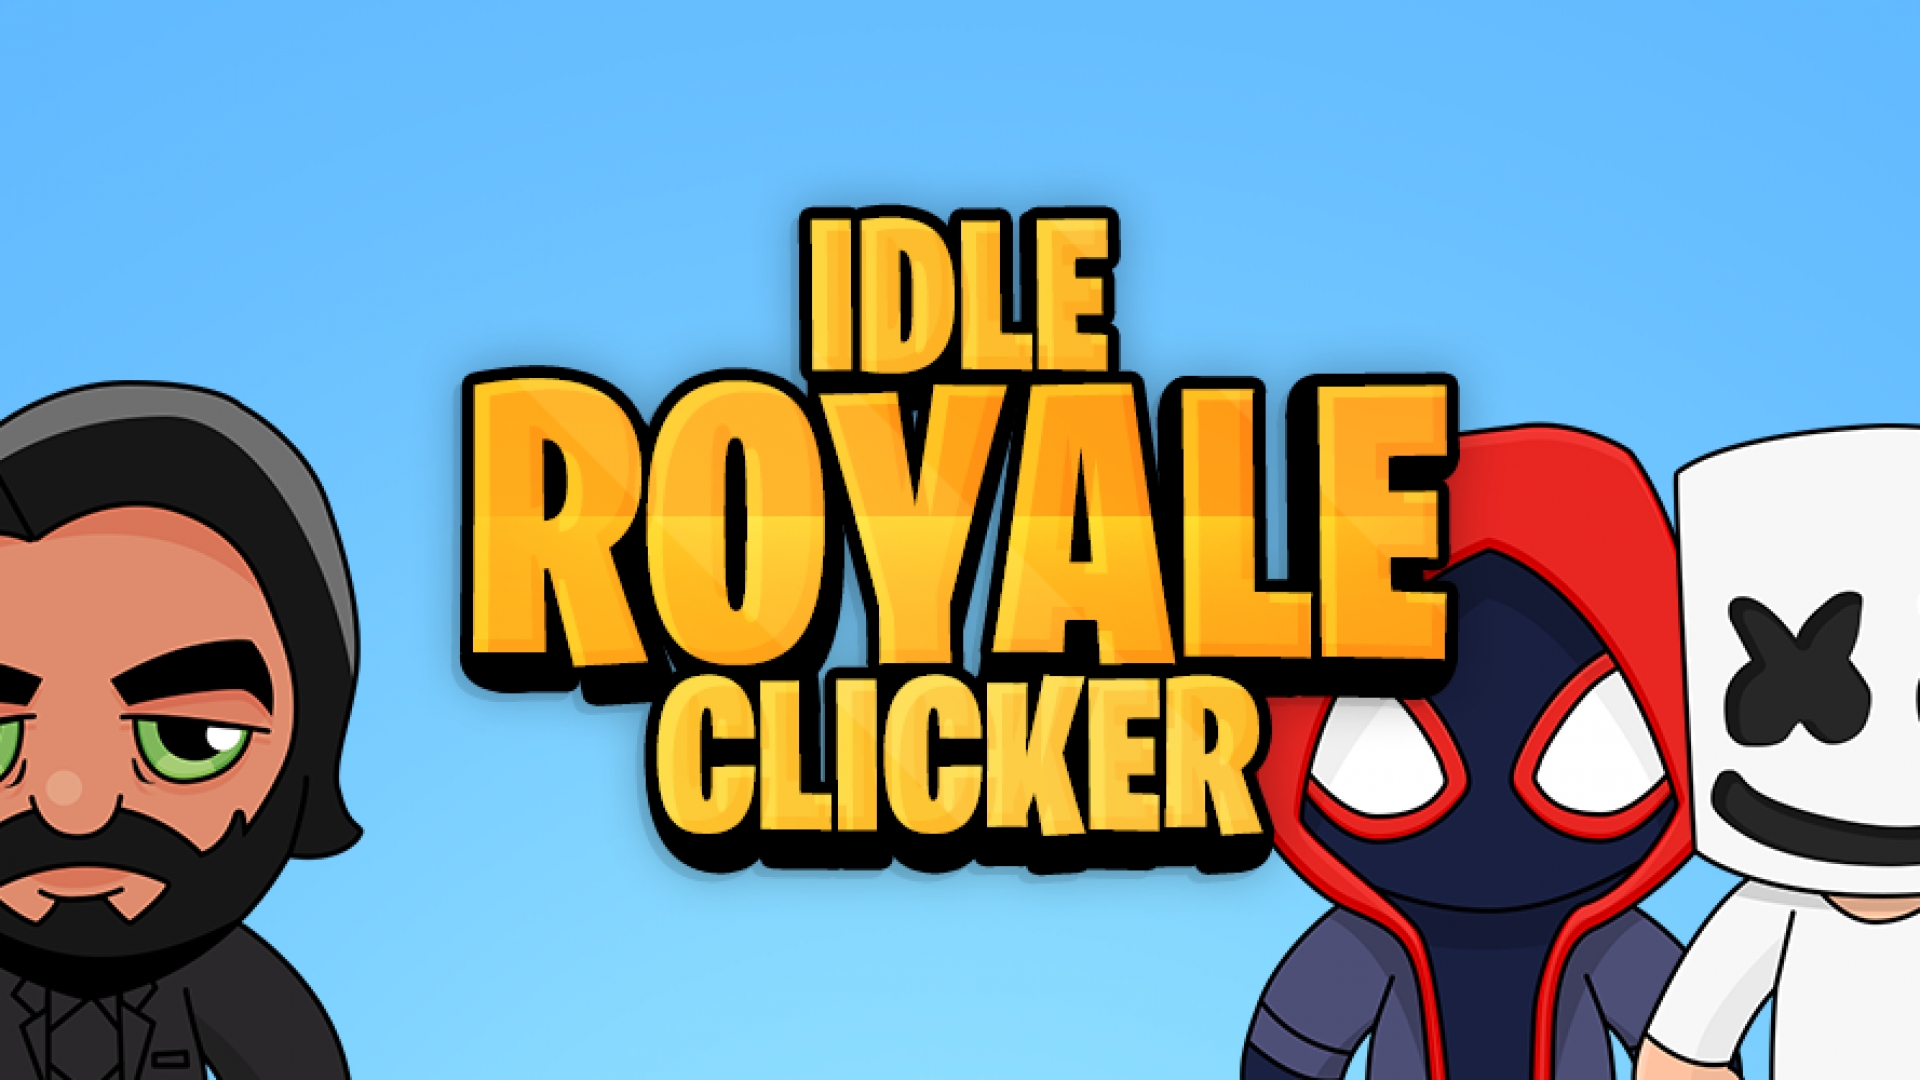 Idle Royale Clicker thumbnail image